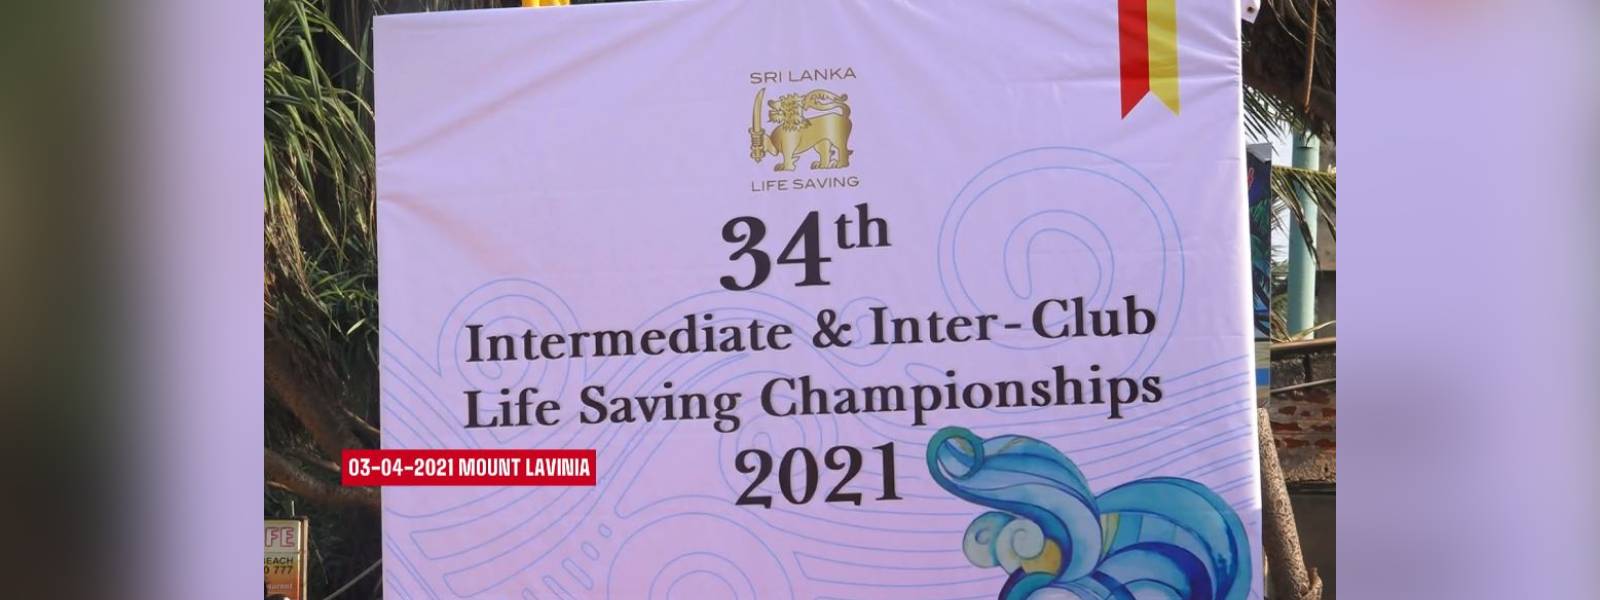 Life Saving Championship held in Colombo